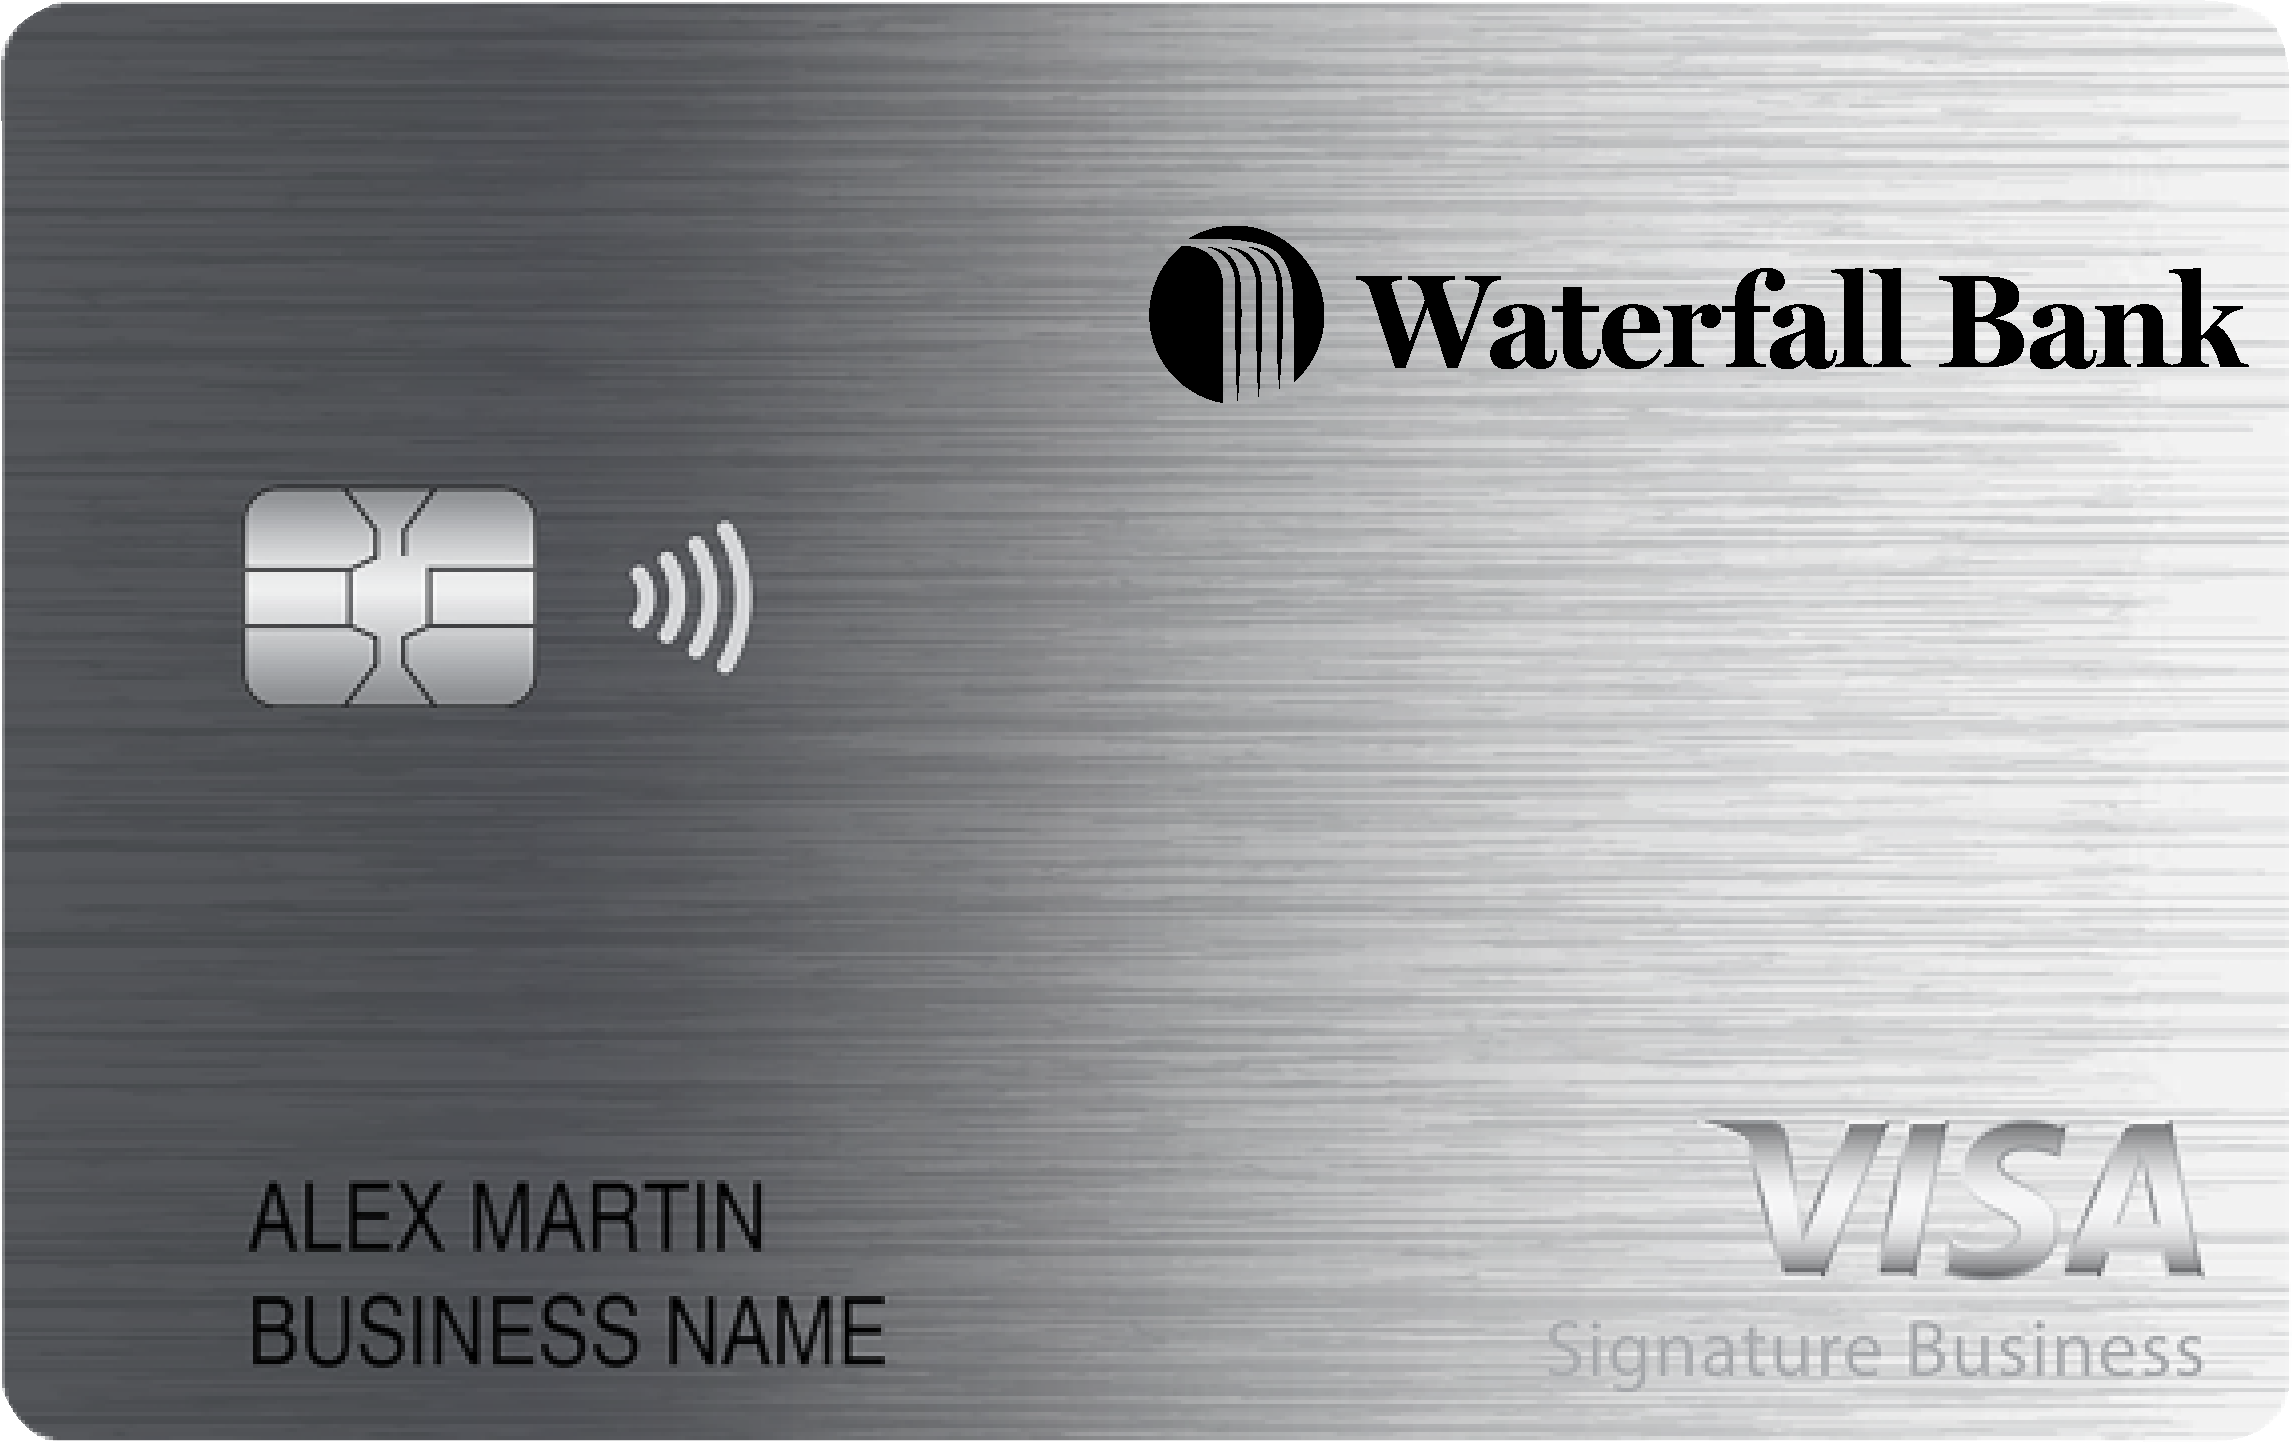 Waterfall Bank Smart Business Rewards Card